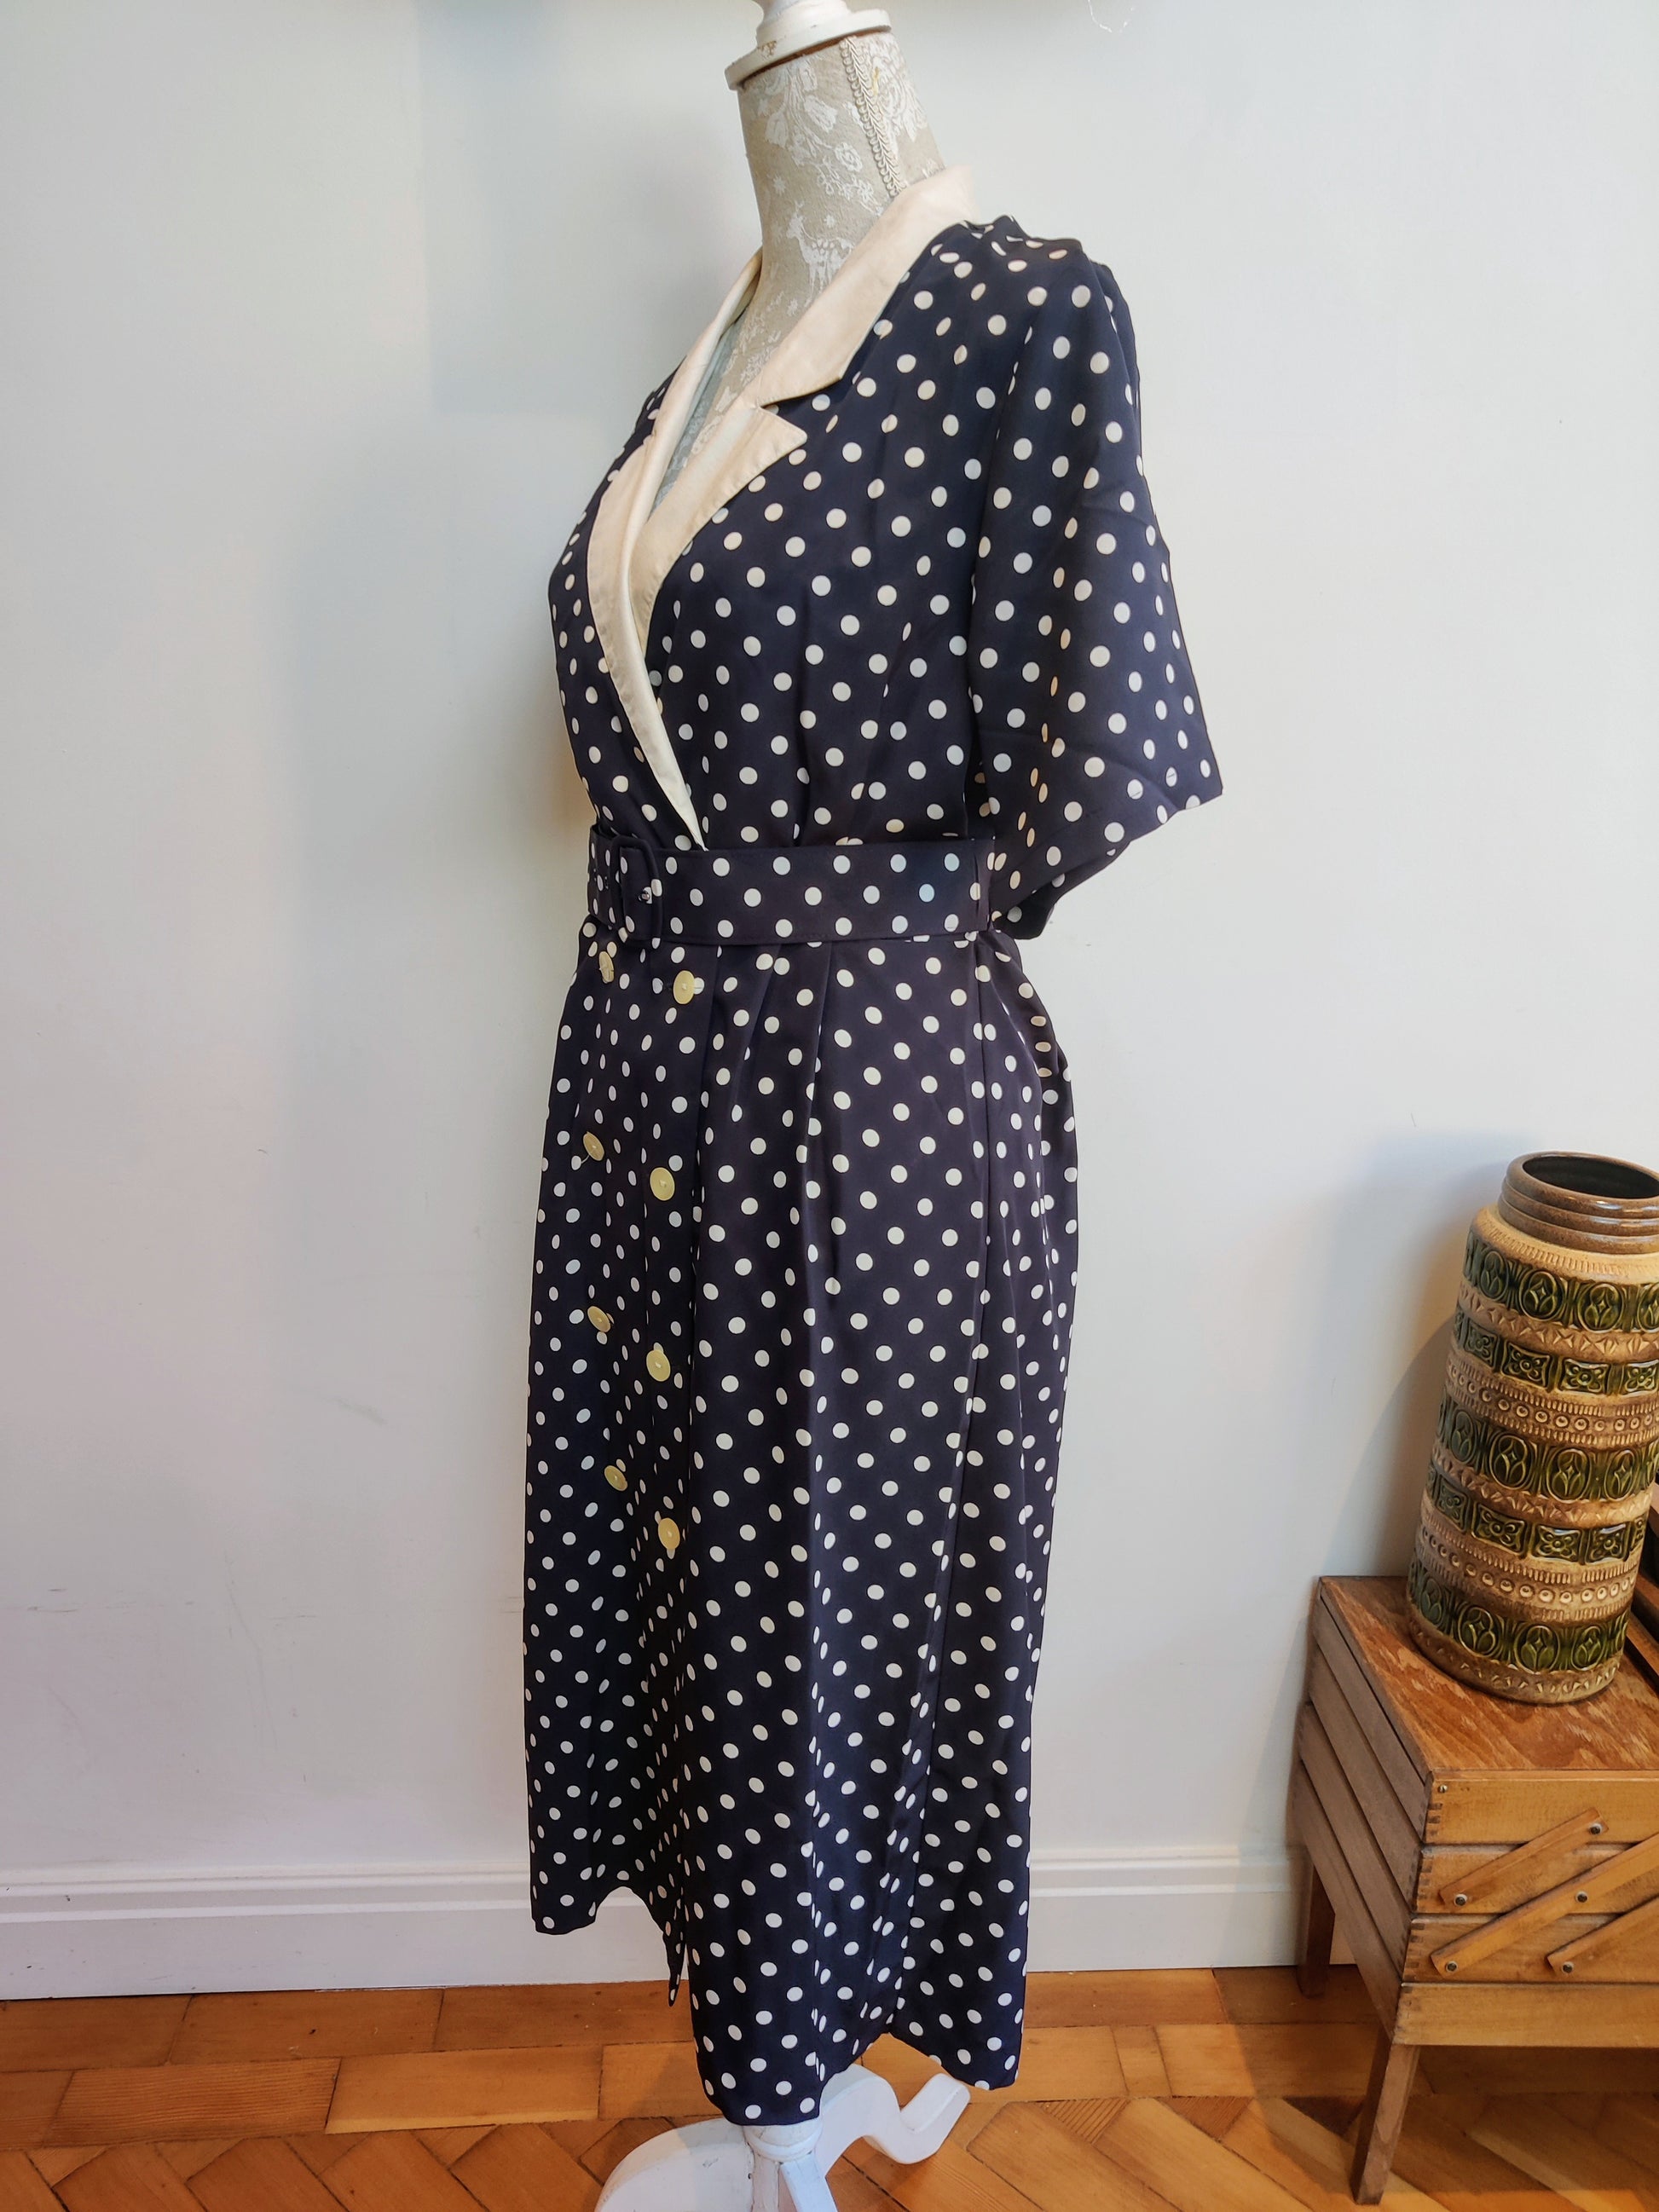 80s polka dot dress with belt.